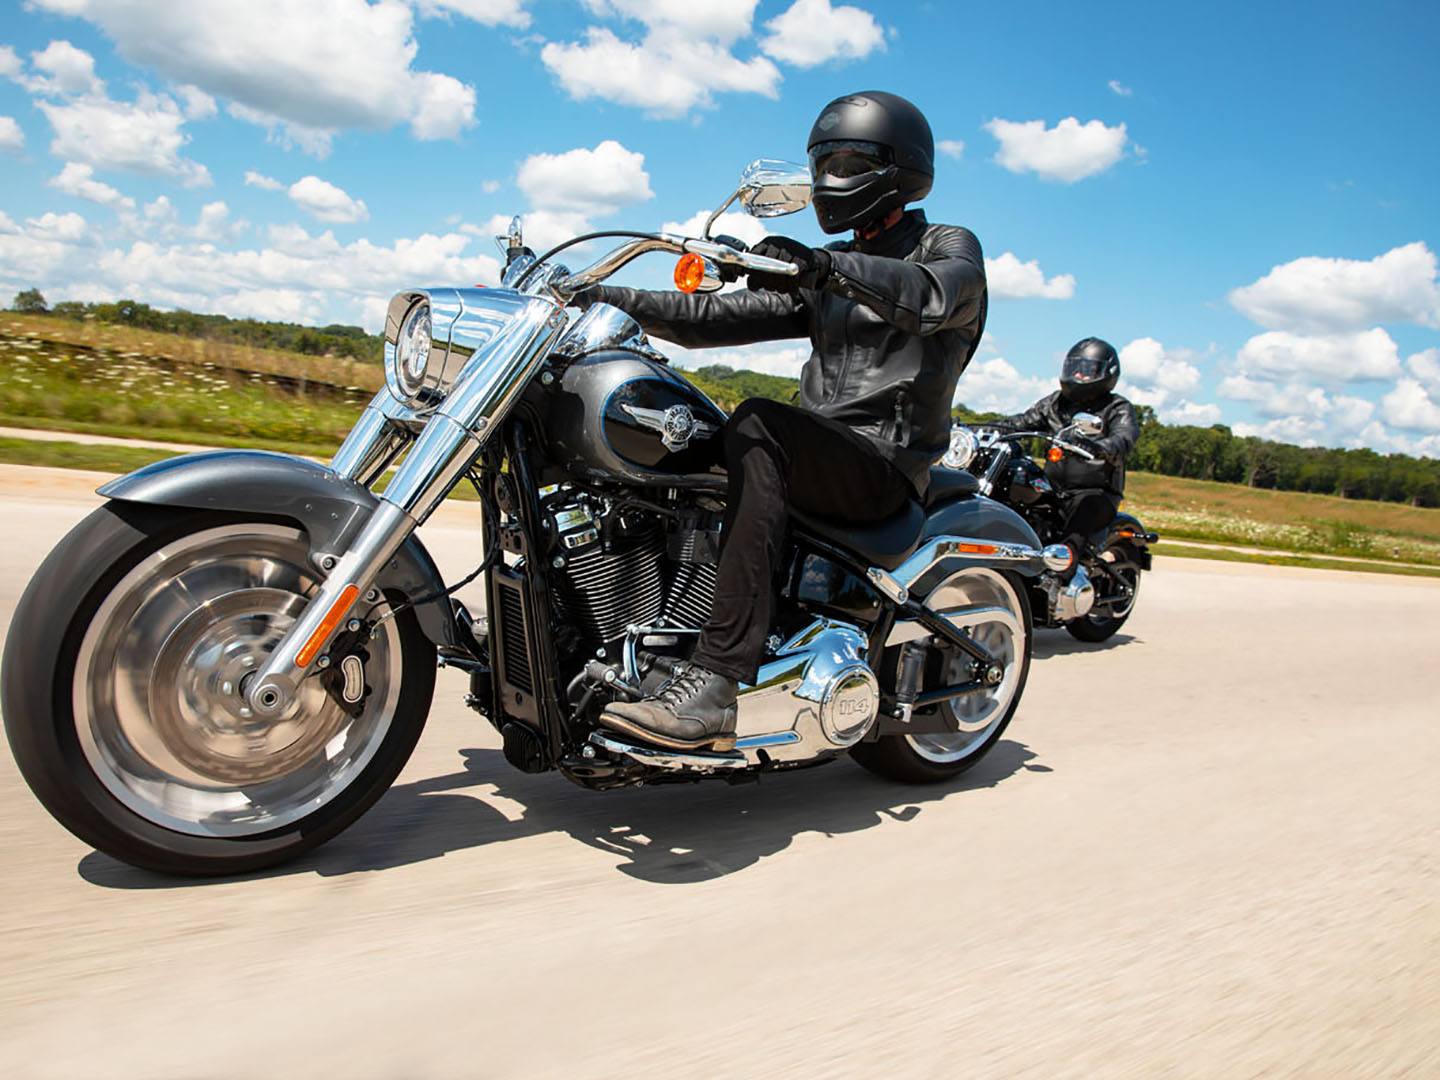 2021 Harley-Davidson Fat Boy® 114 in Athens, Ohio - Photo 13